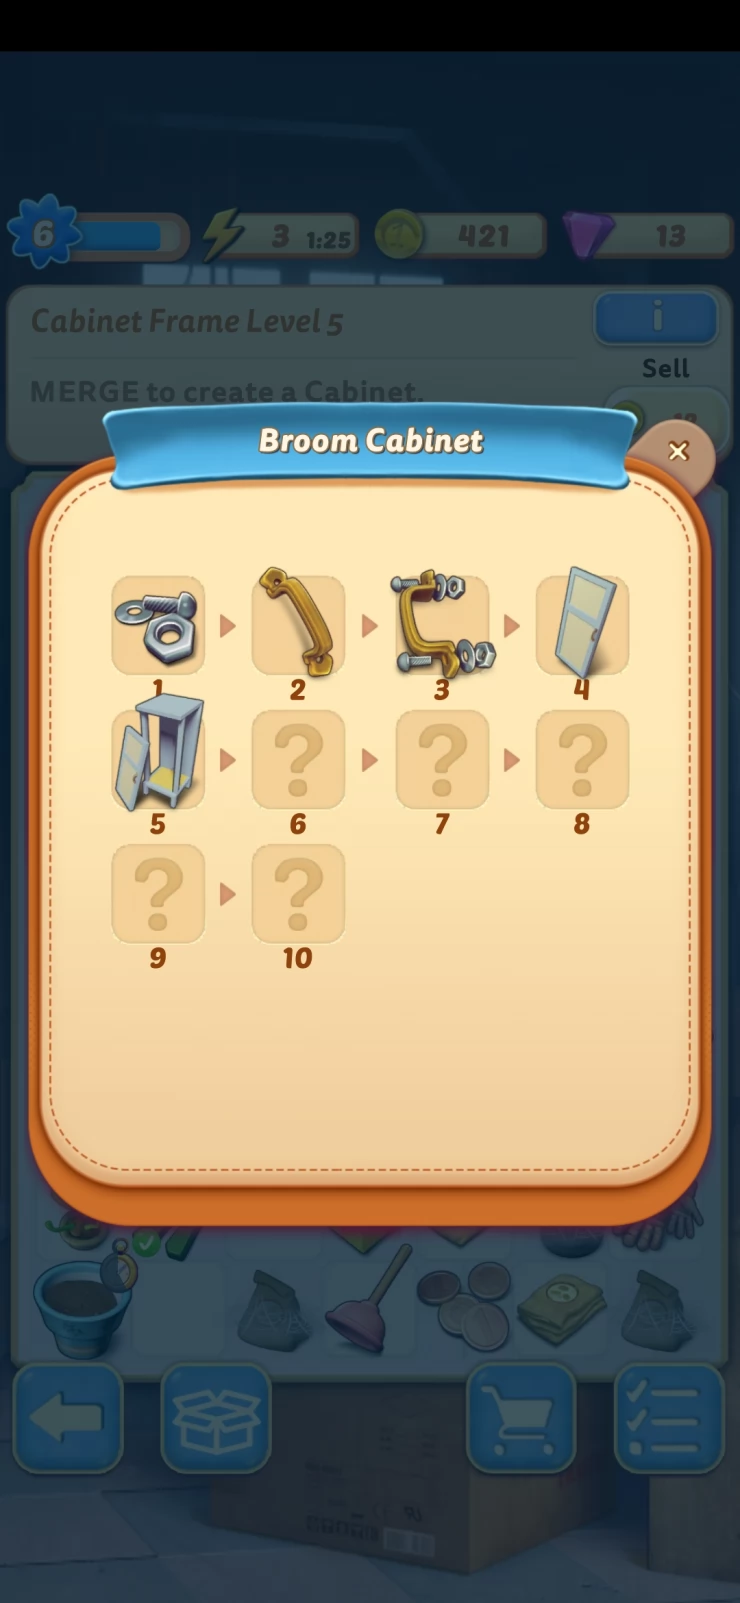 Broom Cabinet